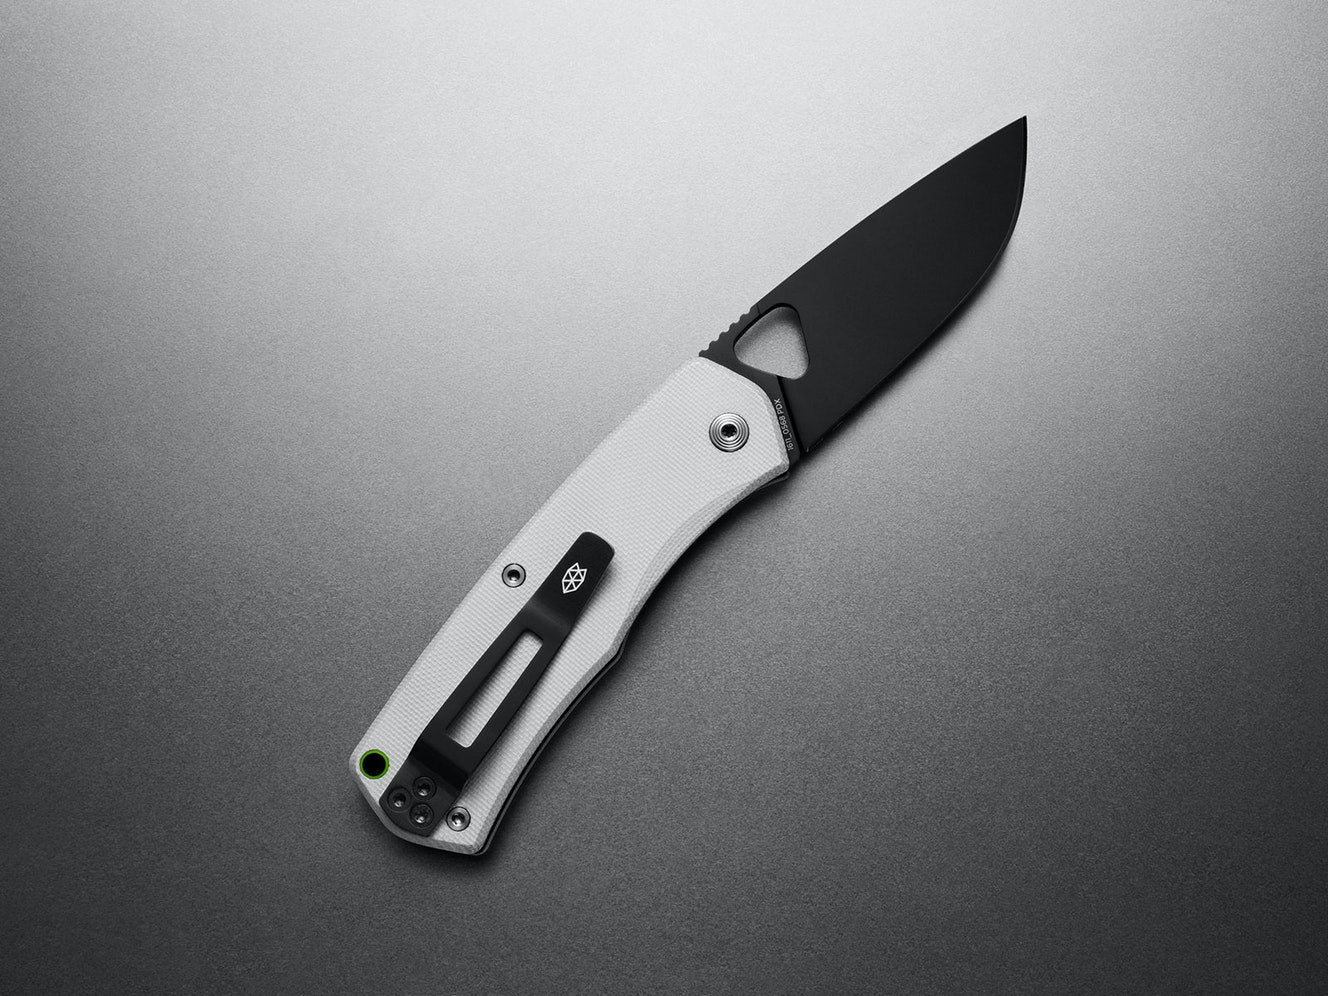 The Folsom Pocket Knife